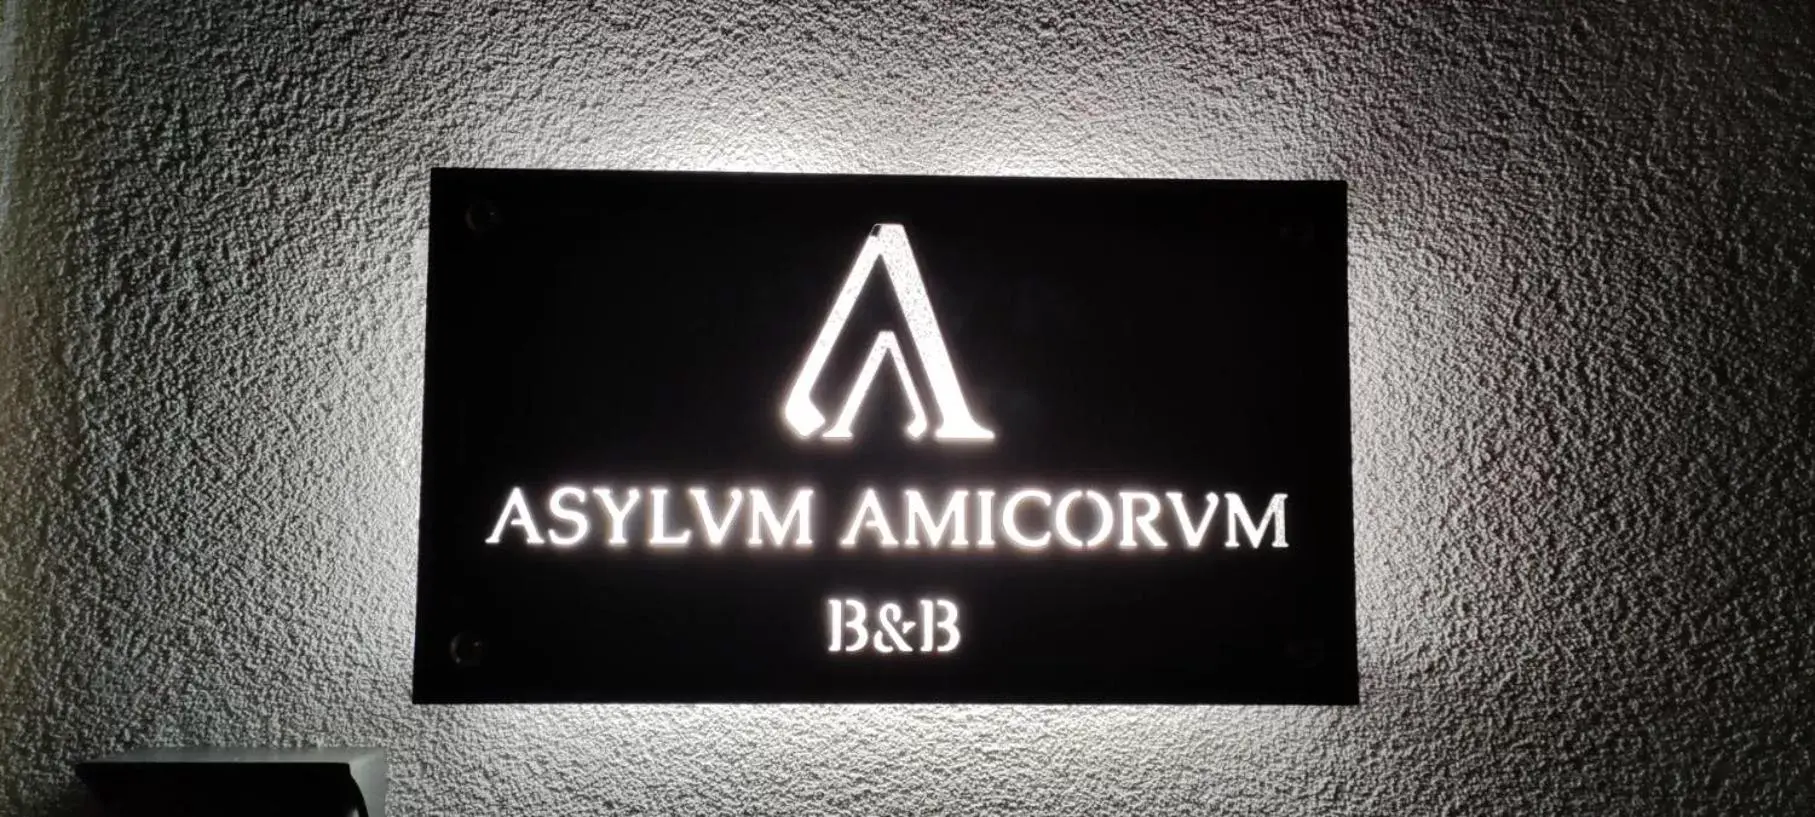 Property logo or sign in Asylum Amicorum Bed & Breakfast